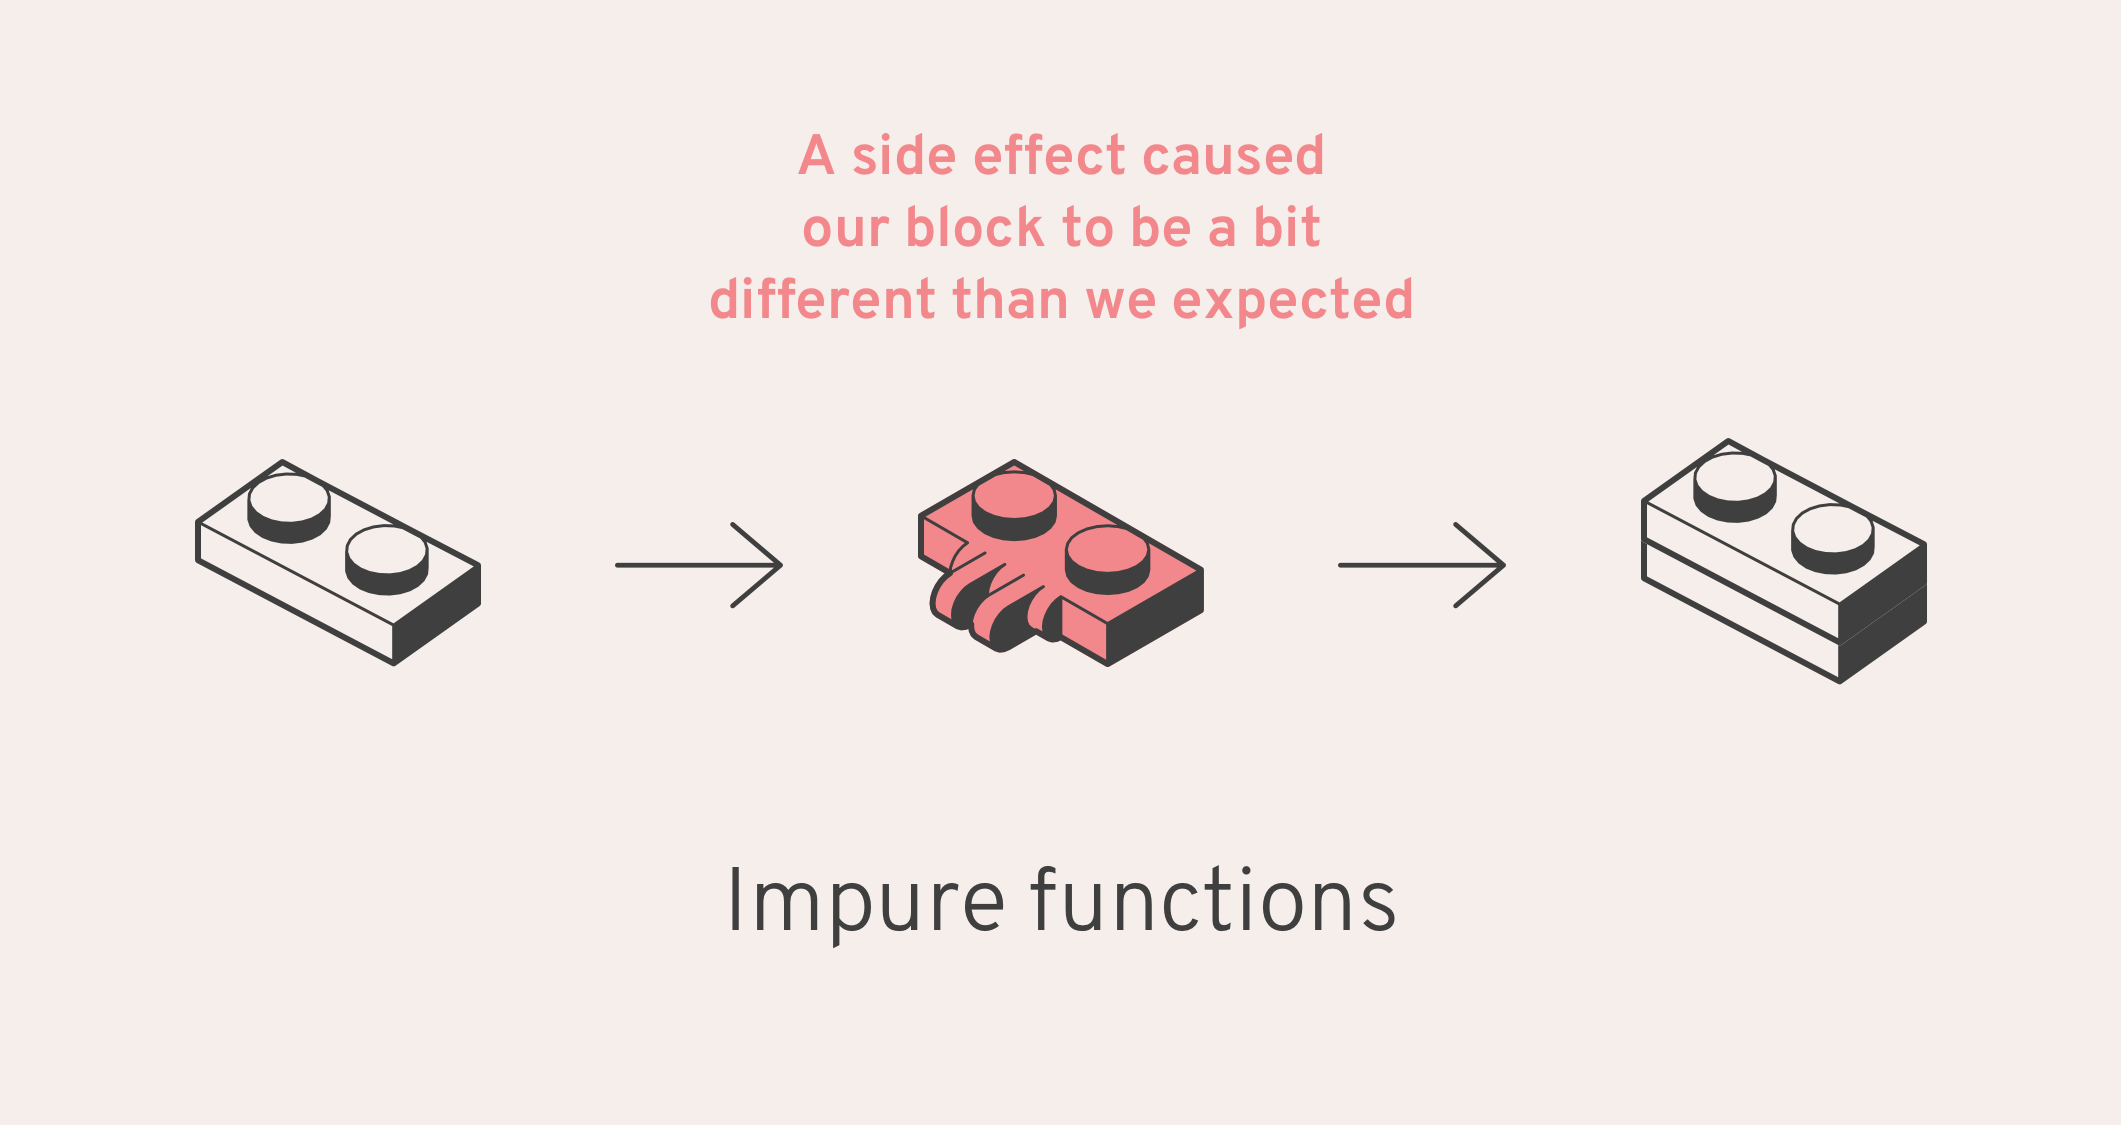 Impure function caused block impurity